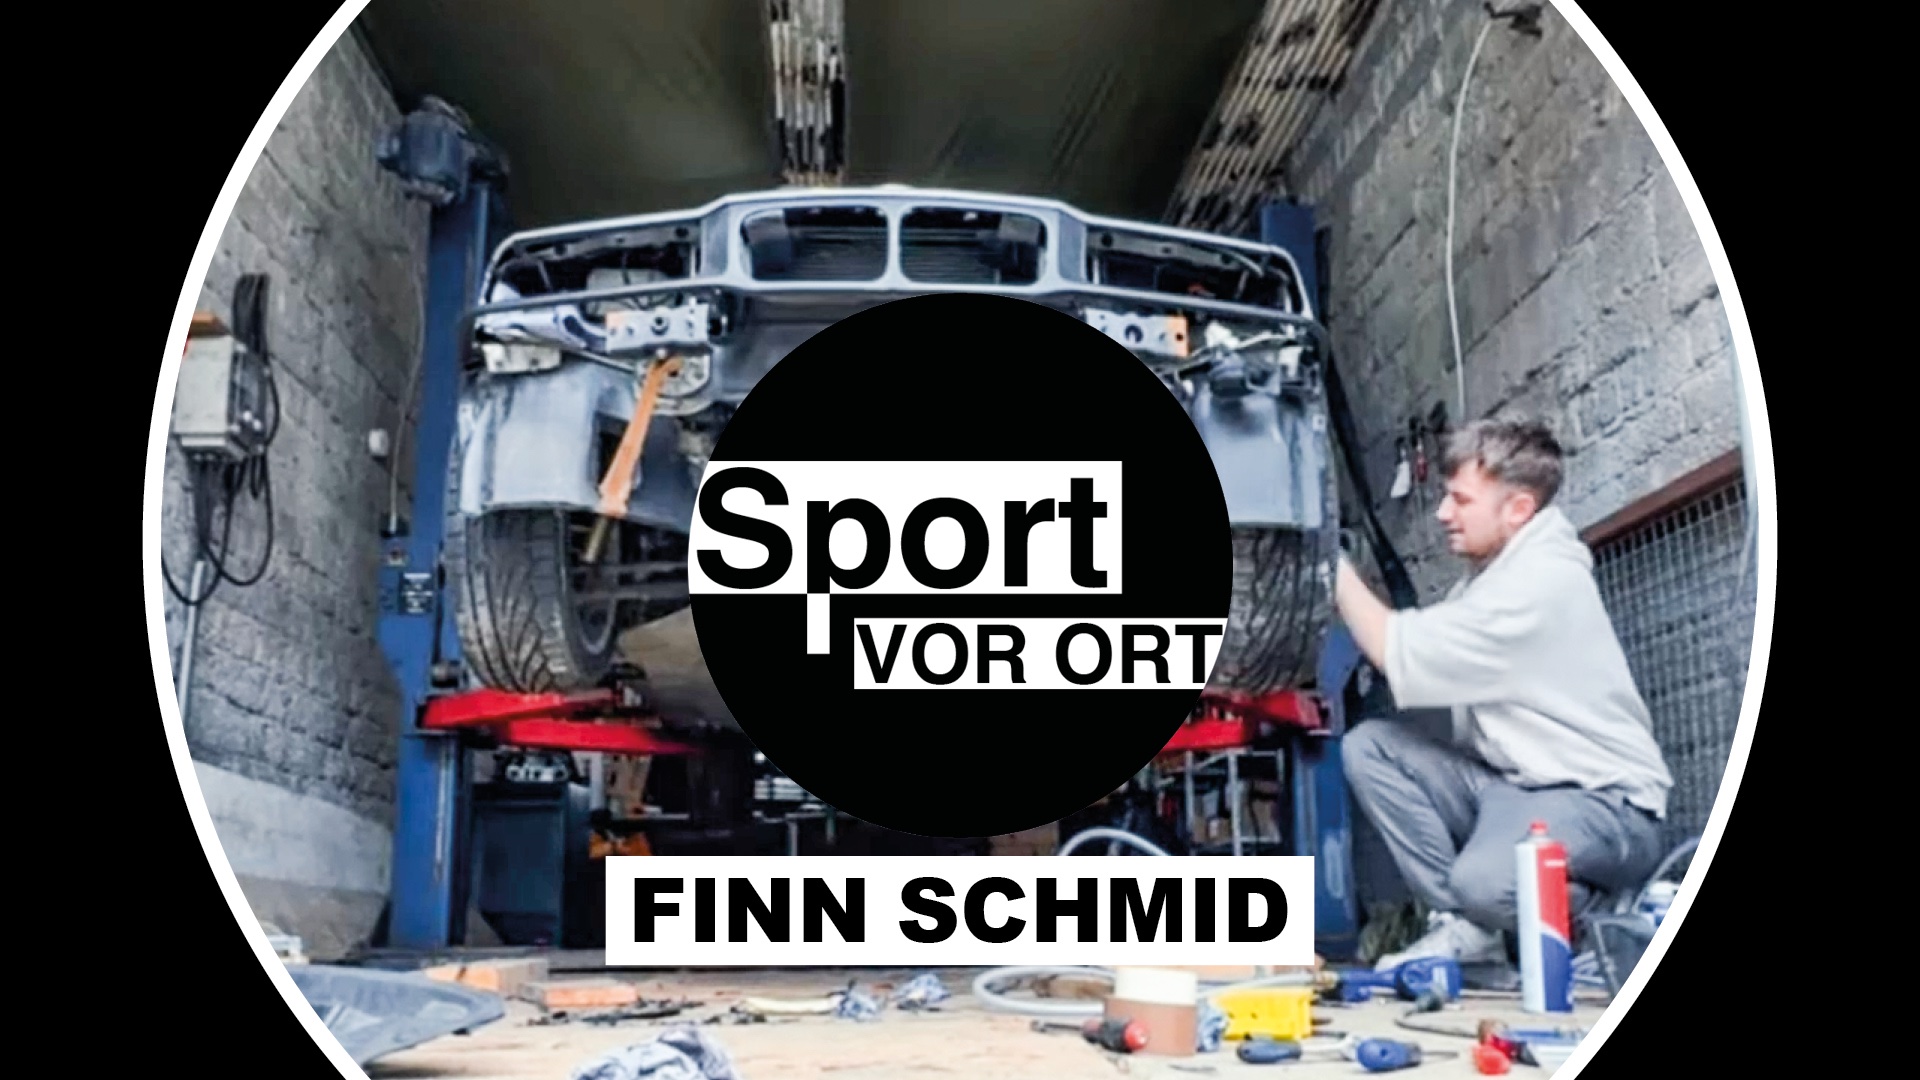 Sport vot Ort: Finn Schmid - Vom Gamer zum Rennfahrer?